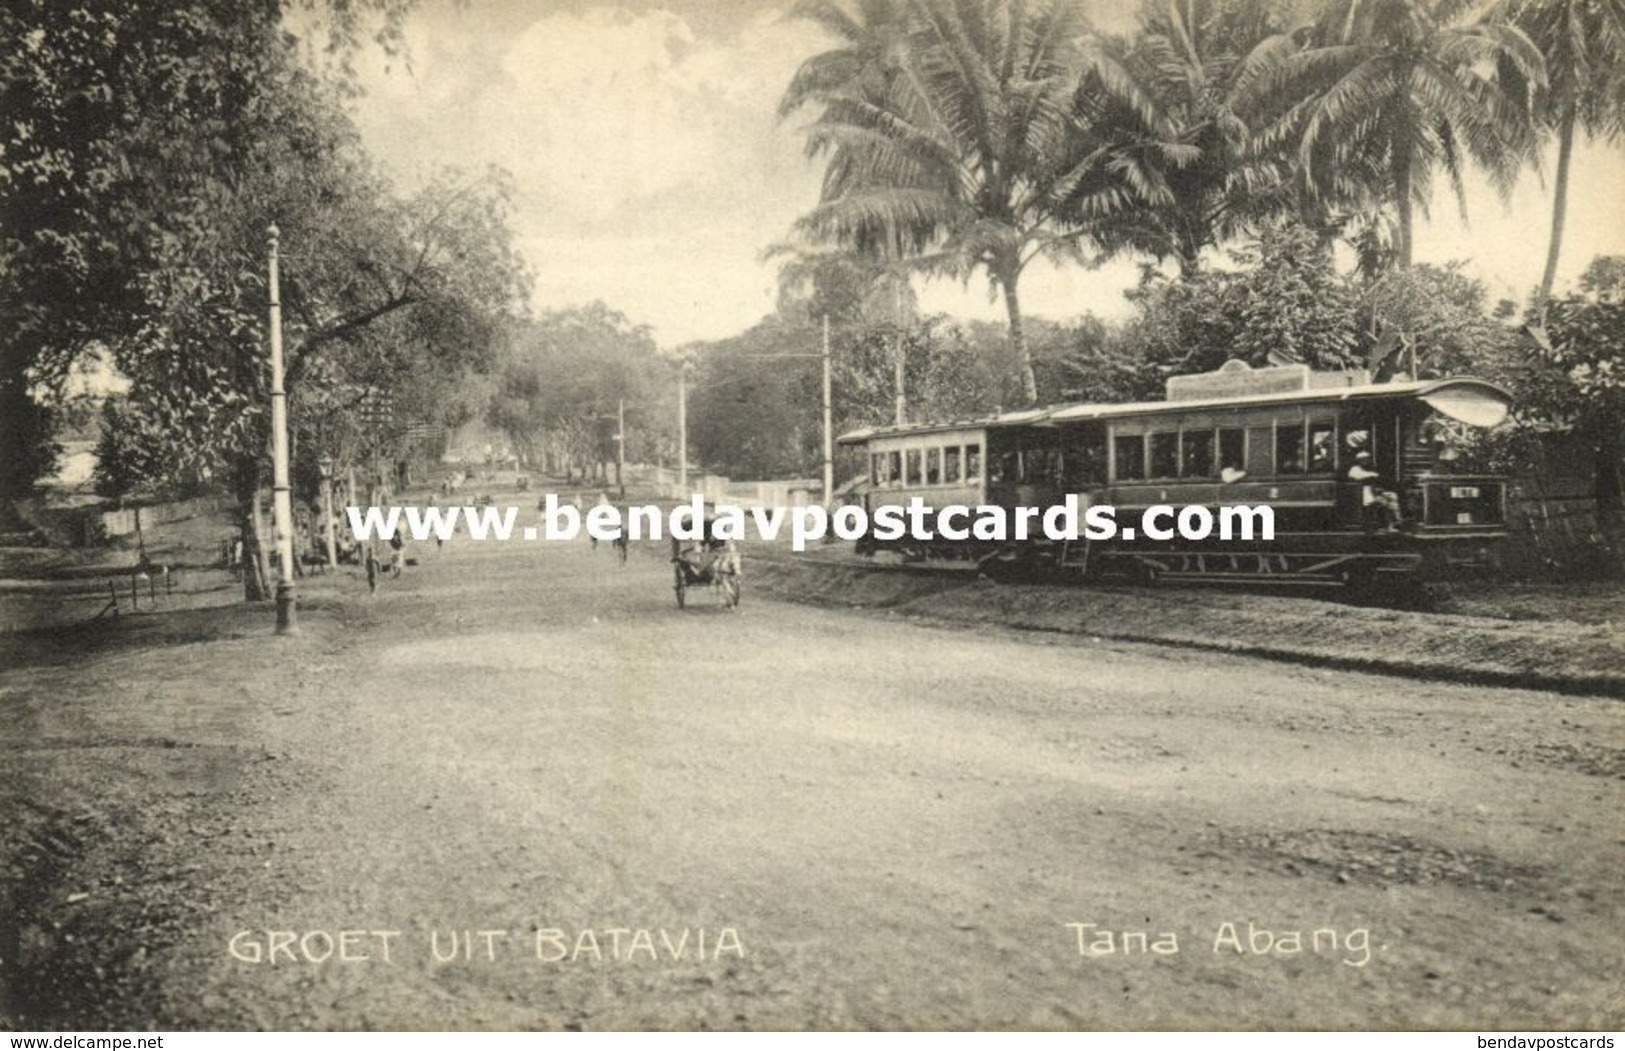 Indonesia, JAVA BATAVIA, Tanah Abang, Tram, Street Car (1910s) Postcard - Indonesia